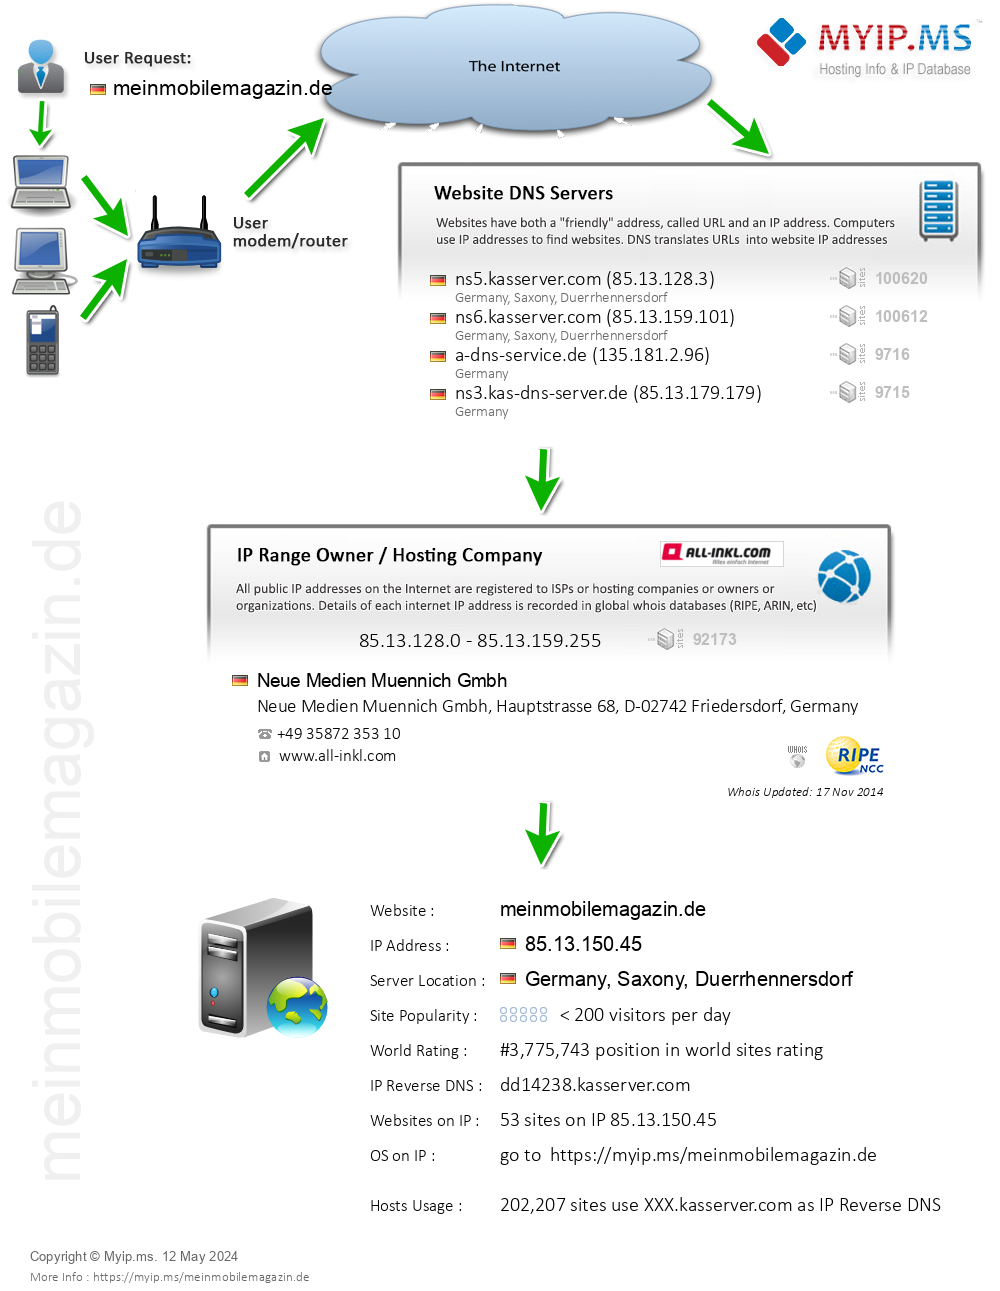 Meinmobilemagazin.de - Website Hosting Visual IP Diagram